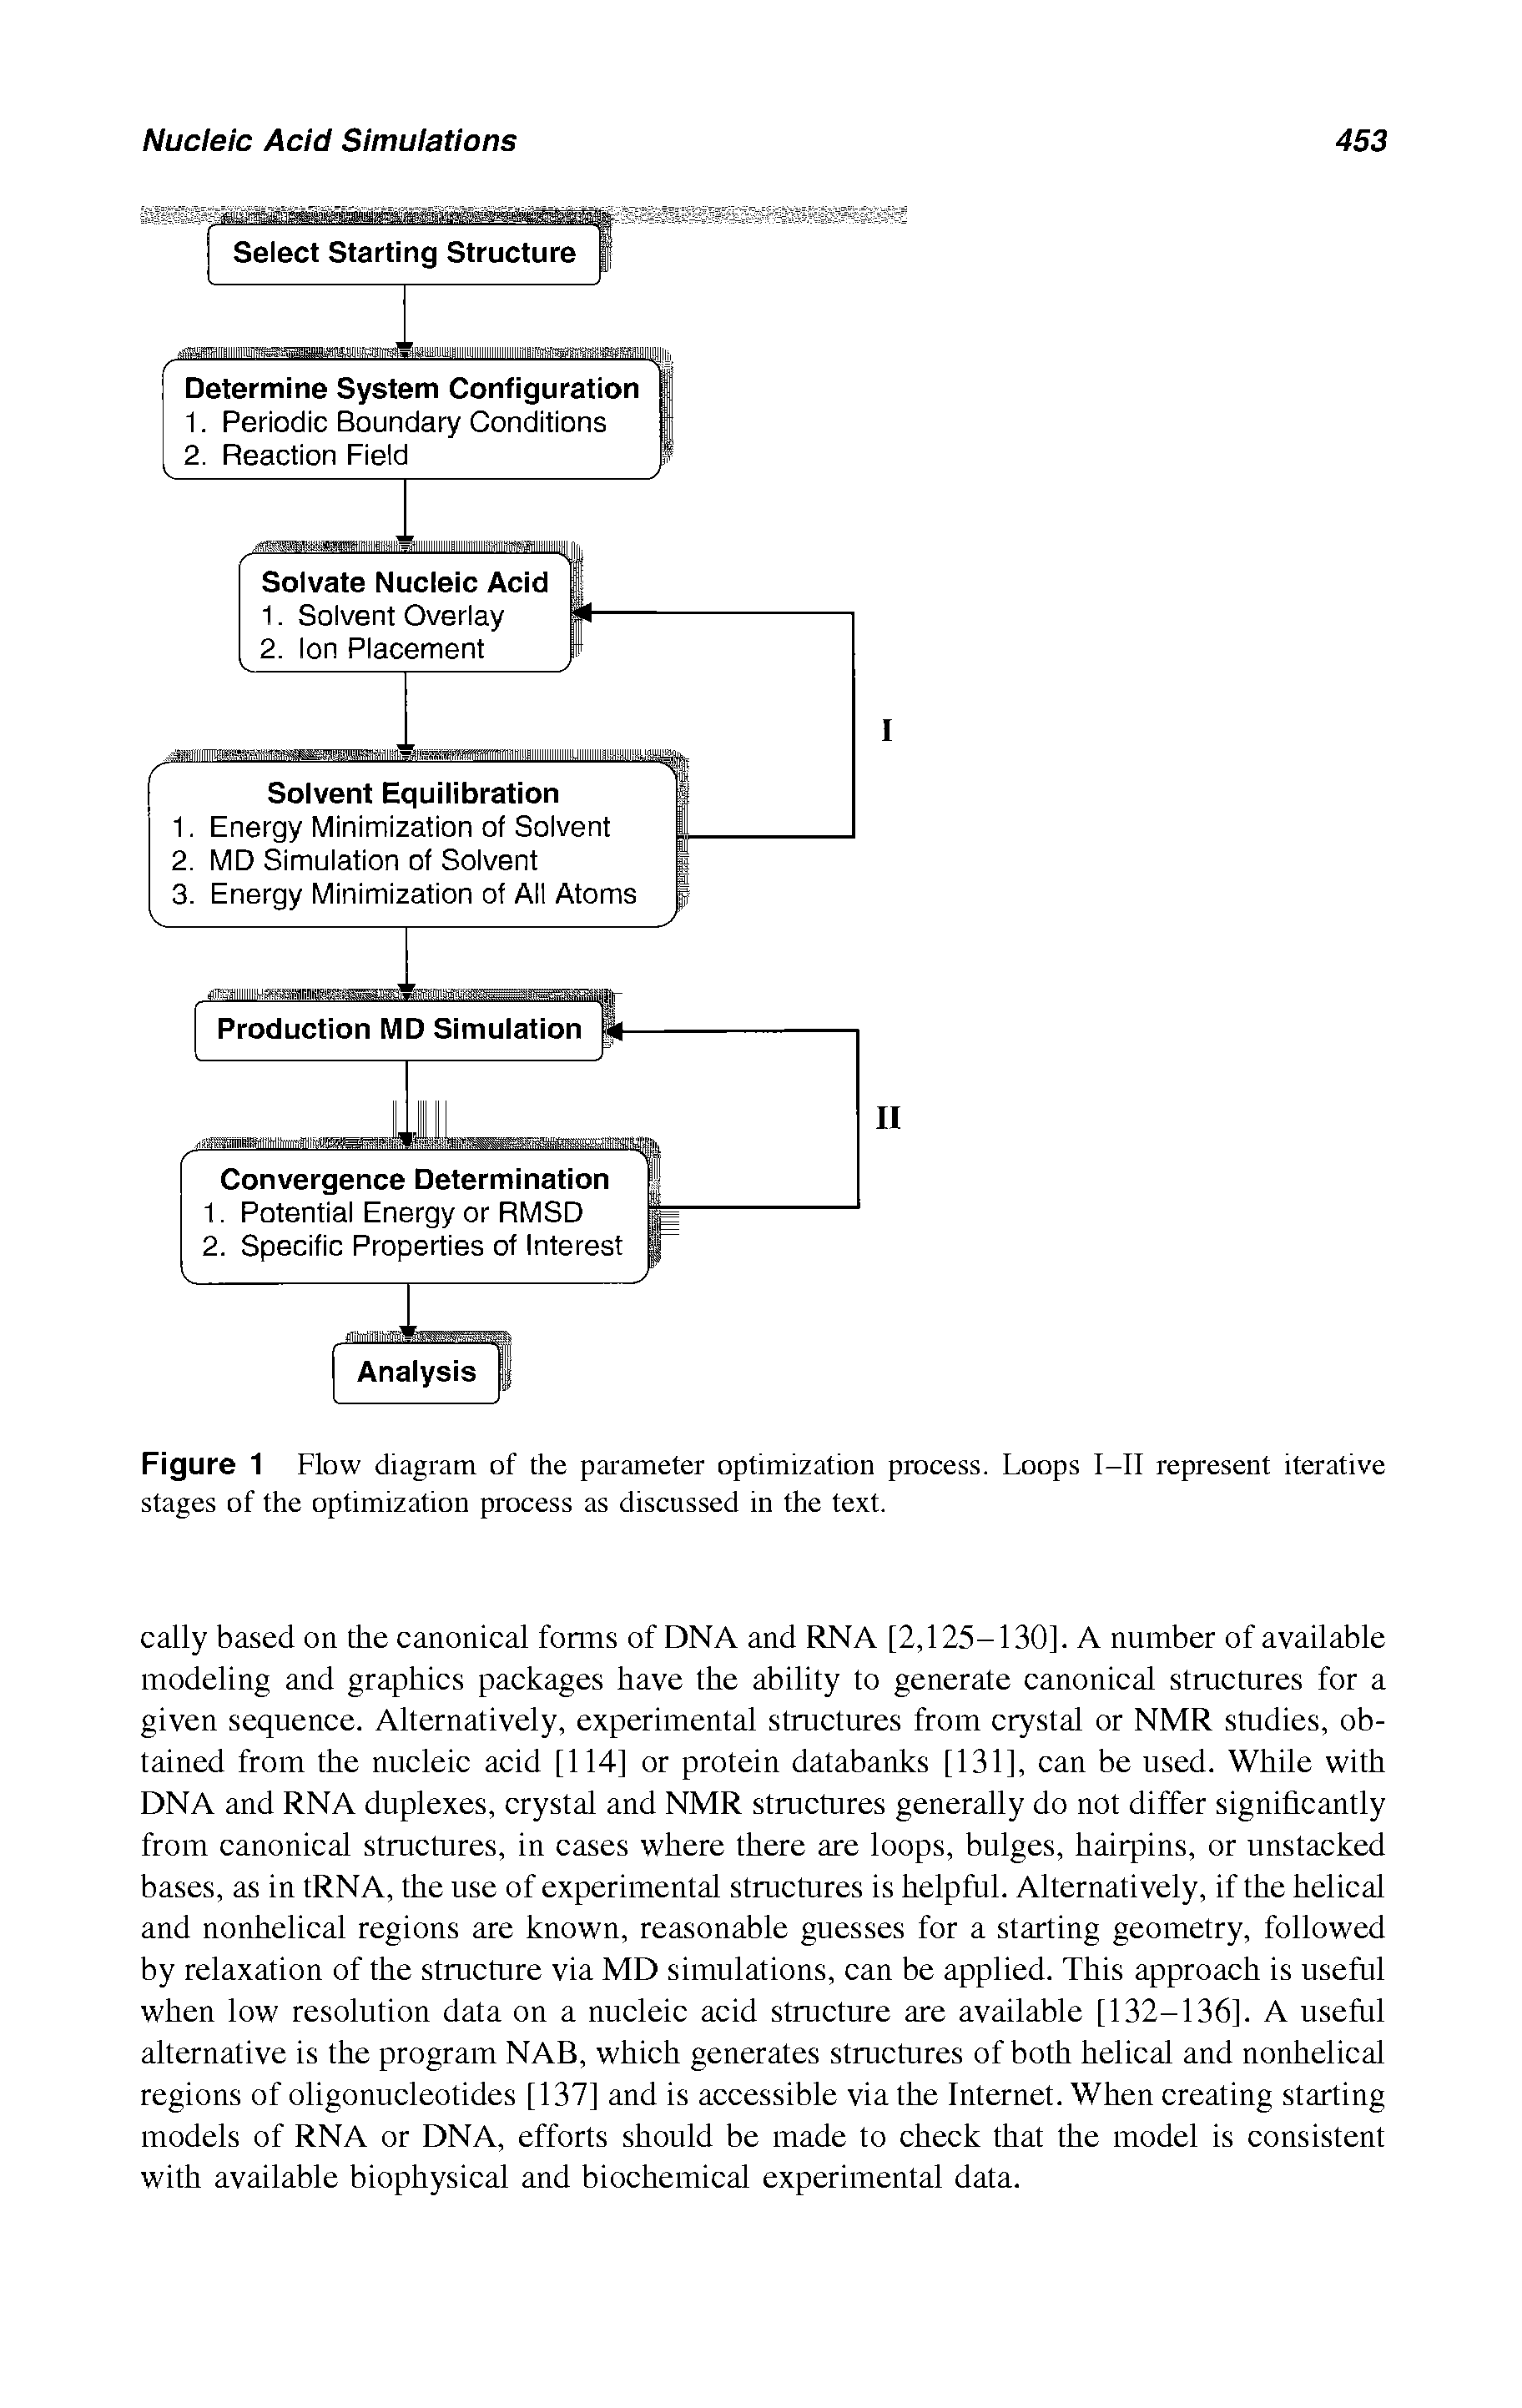 Figure 1 Flow diagram of the parameter optimization process. Loops I-II represent iterative stages of the optimization process as discussed in the text.